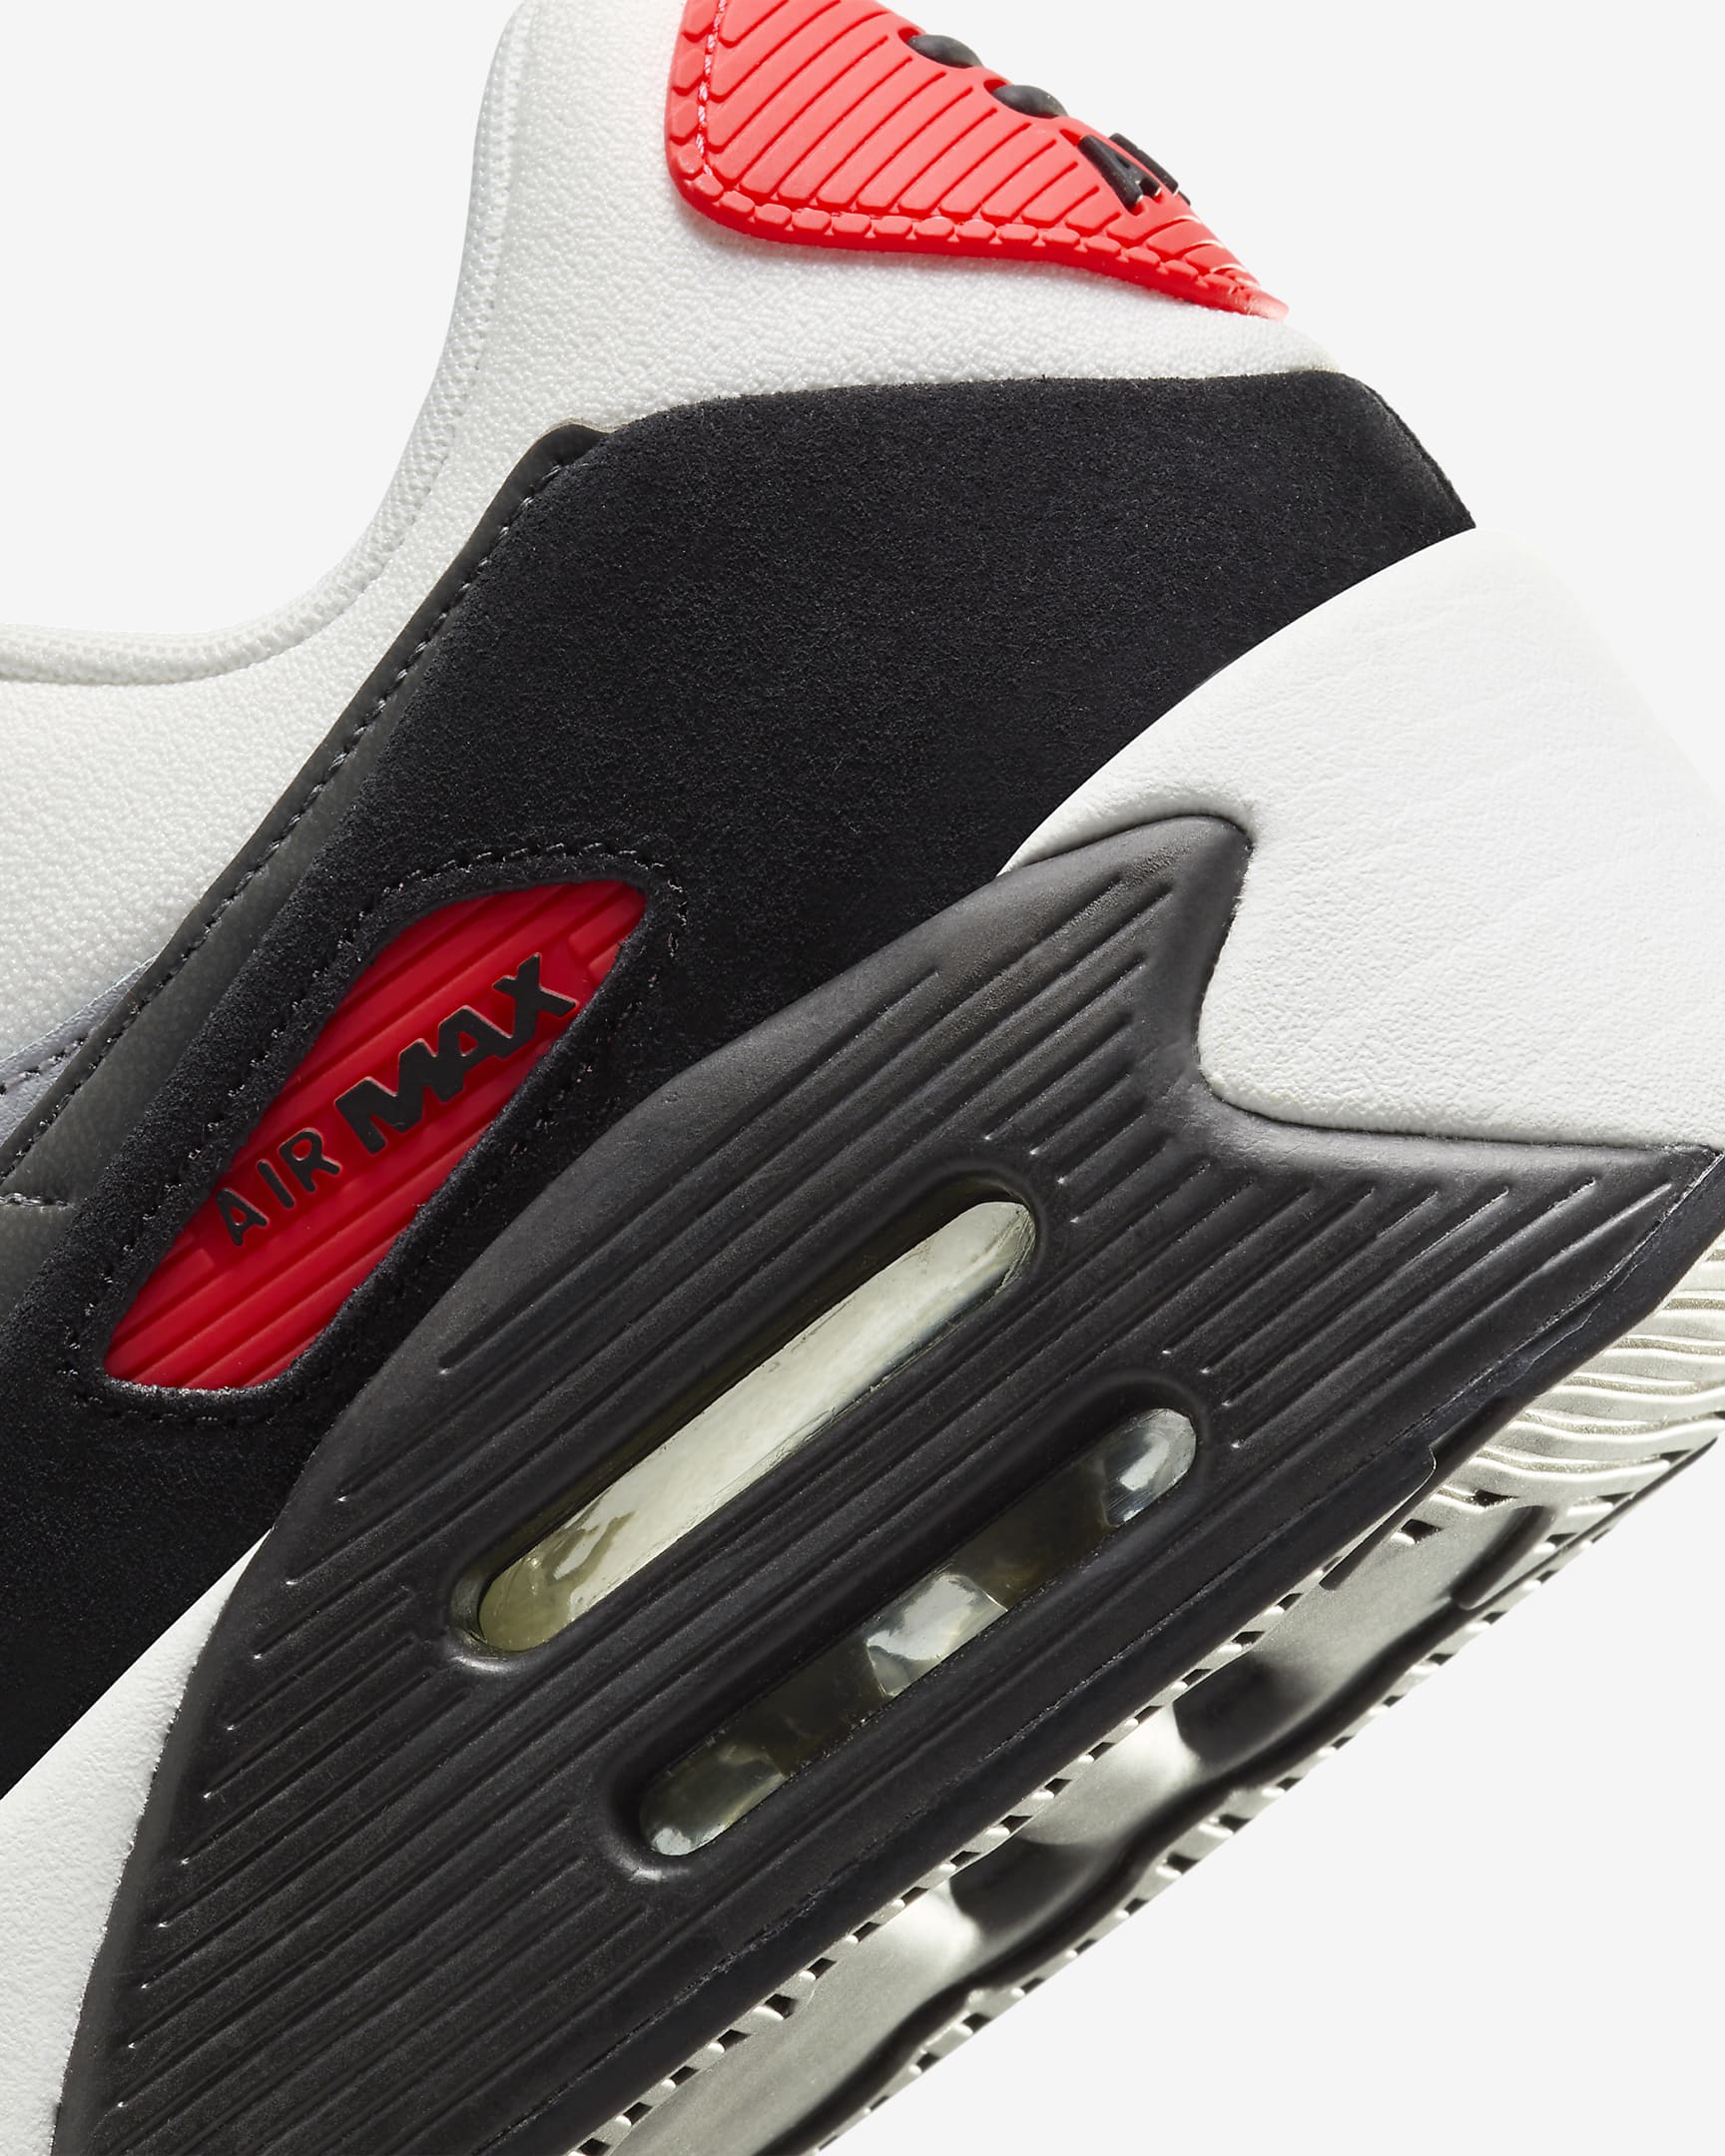 Nike Air Max 90 LV8 Women's Shoes - Summit White/Black/Wolf Grey/Smoke Grey